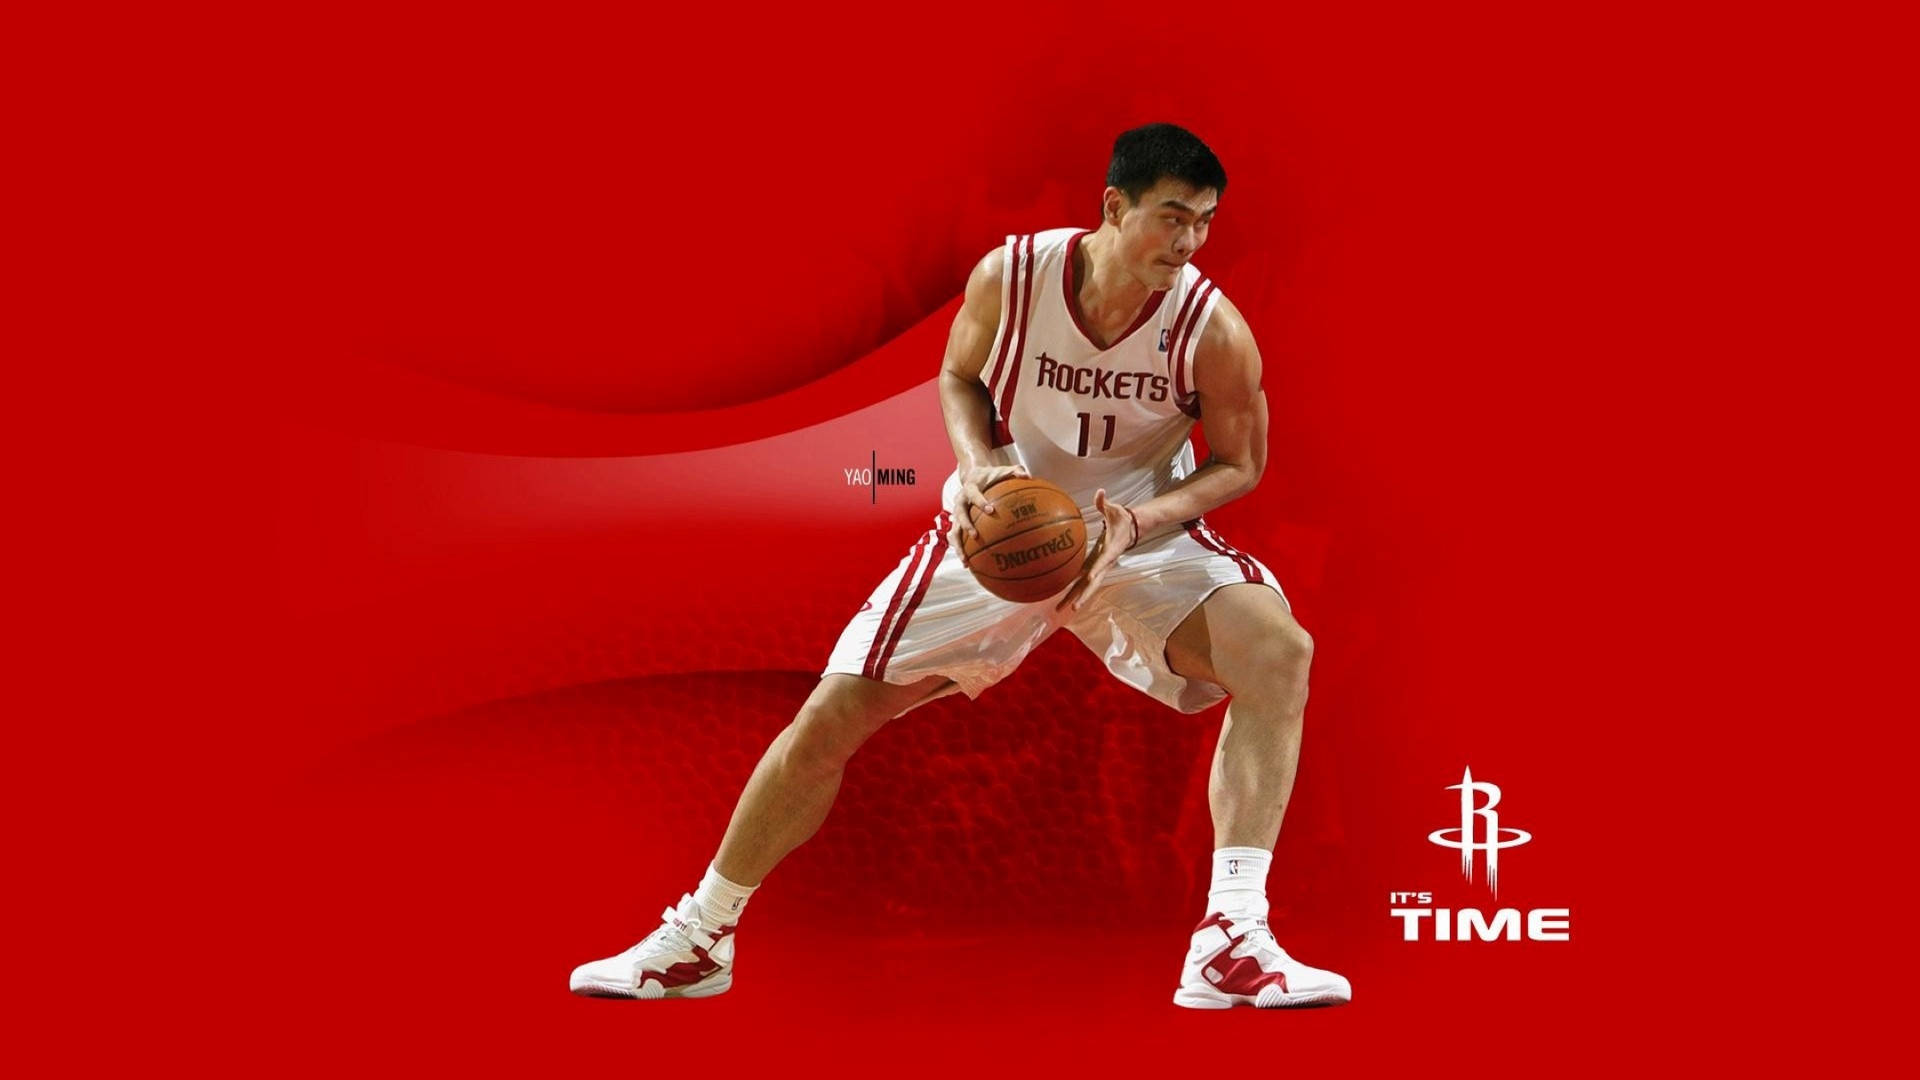 Oshouston Rockets Yao Ming. Papel de Parede